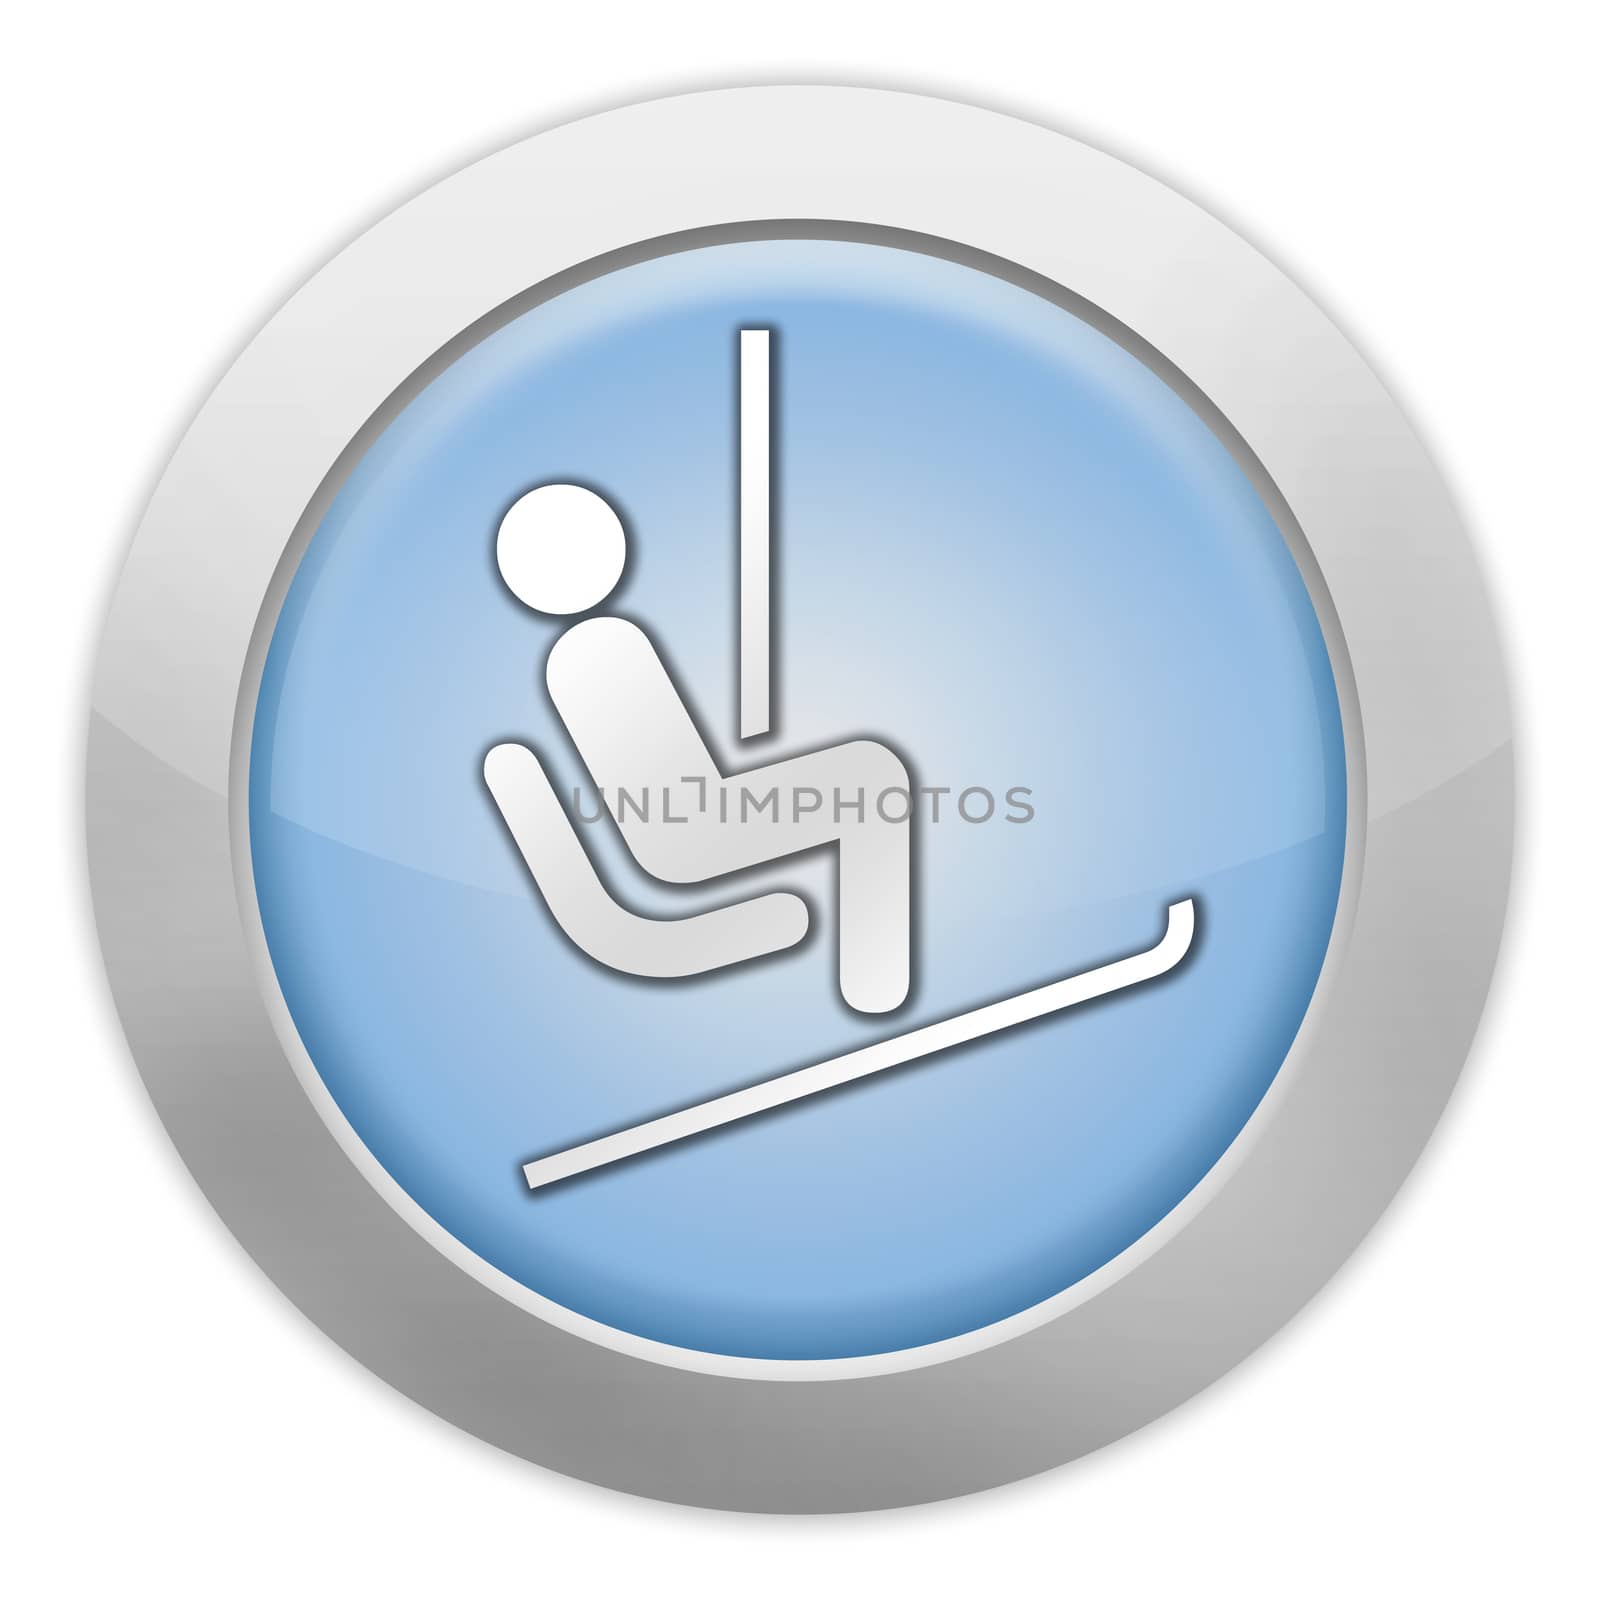 Icon, Button, Pictogram Ski Lift by mindscanner